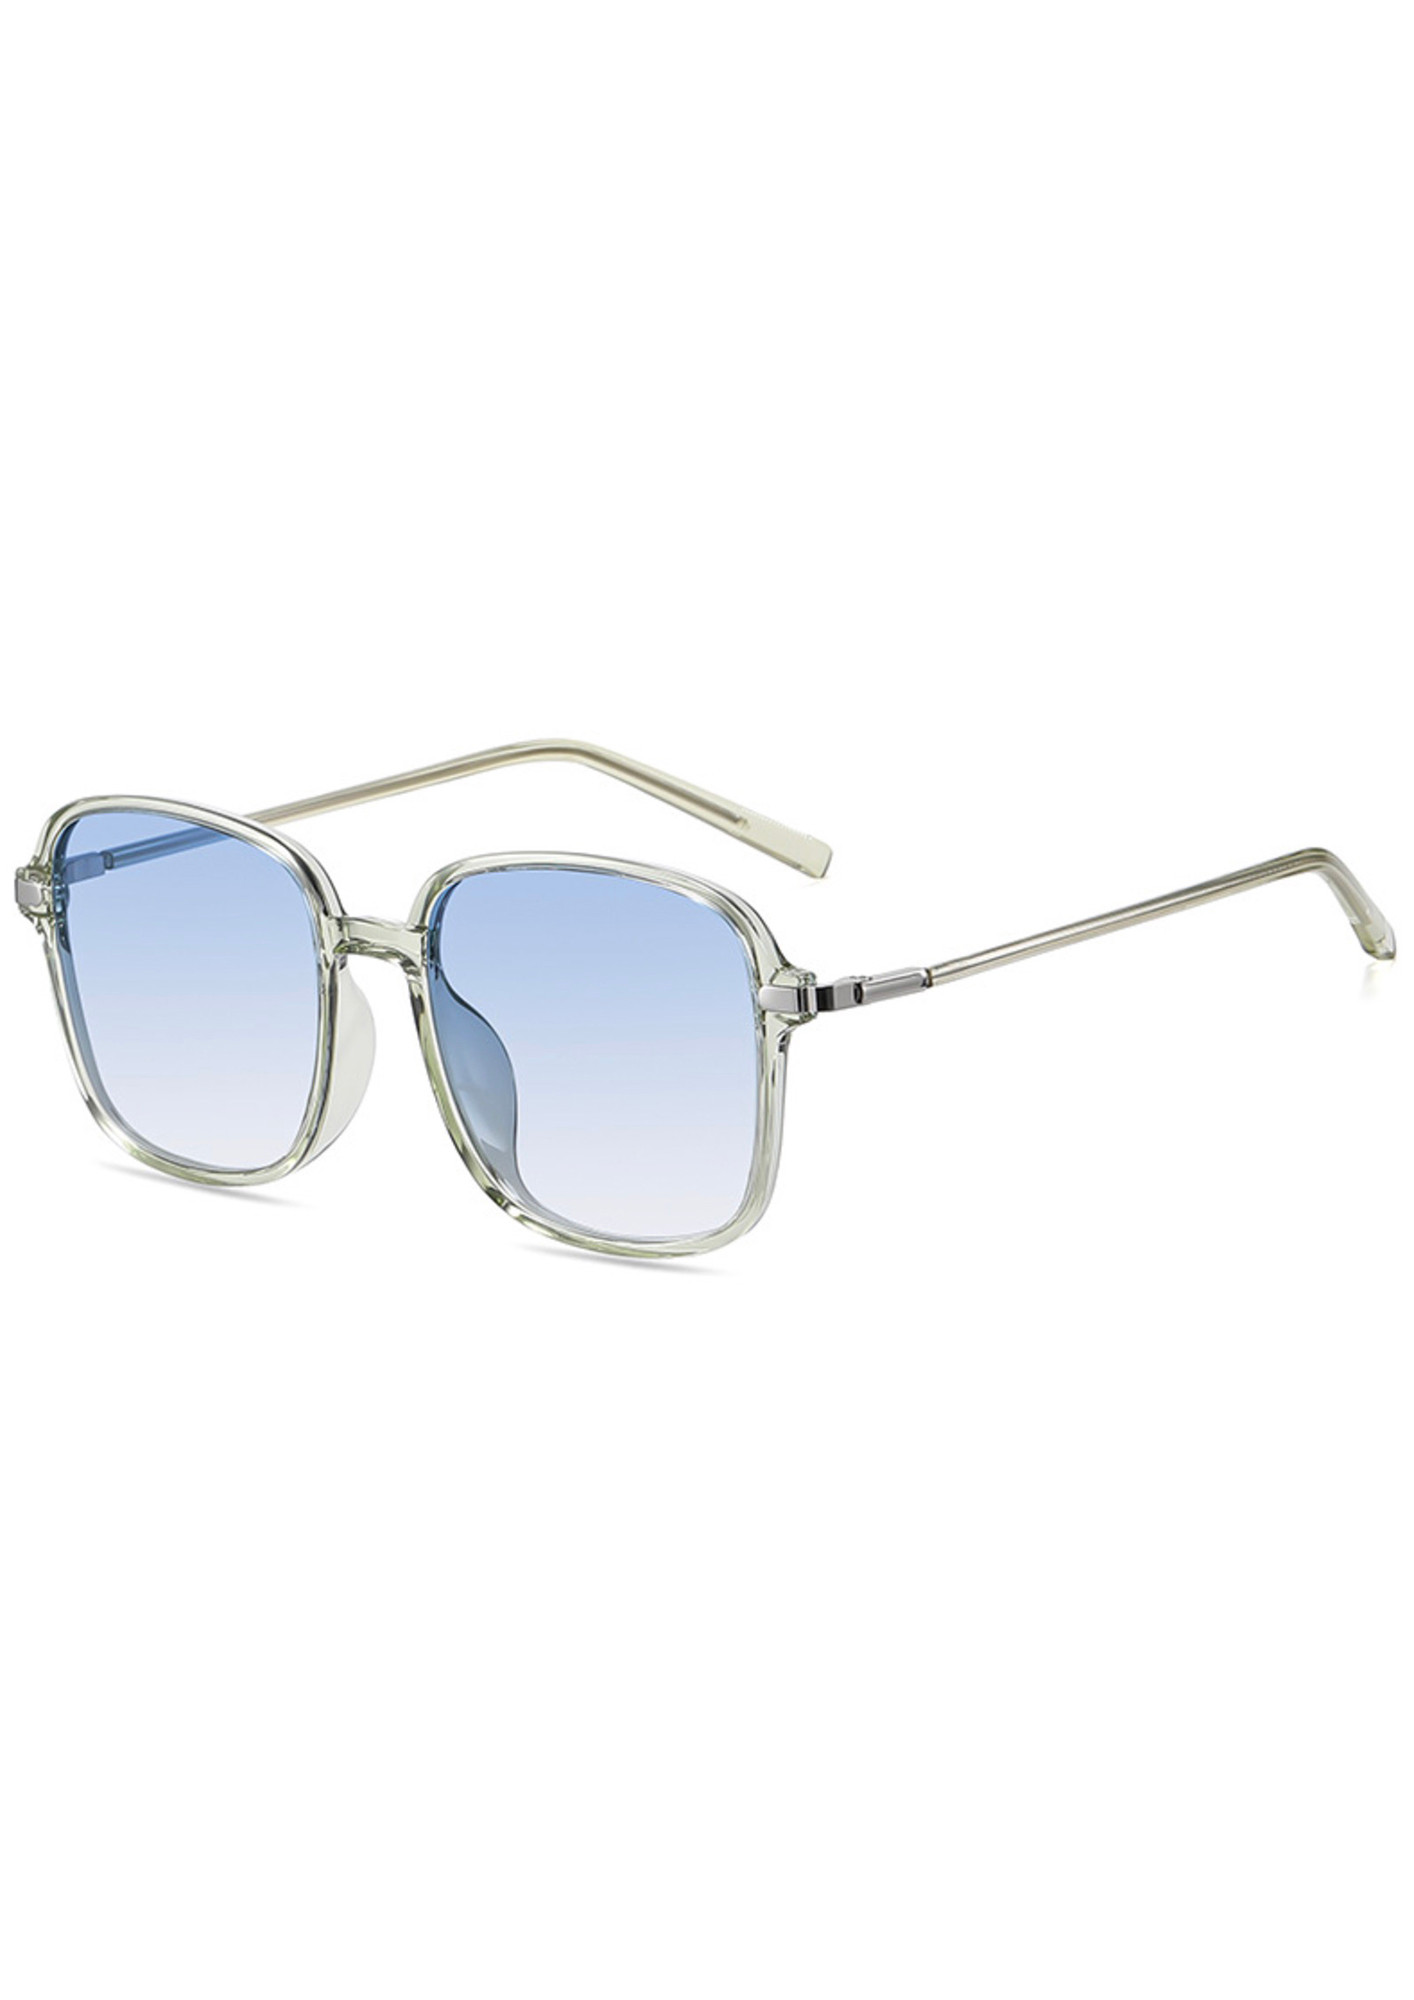 Retro Square Sunglasses - Affordable Polarized Style with Anti-Glare  Protection